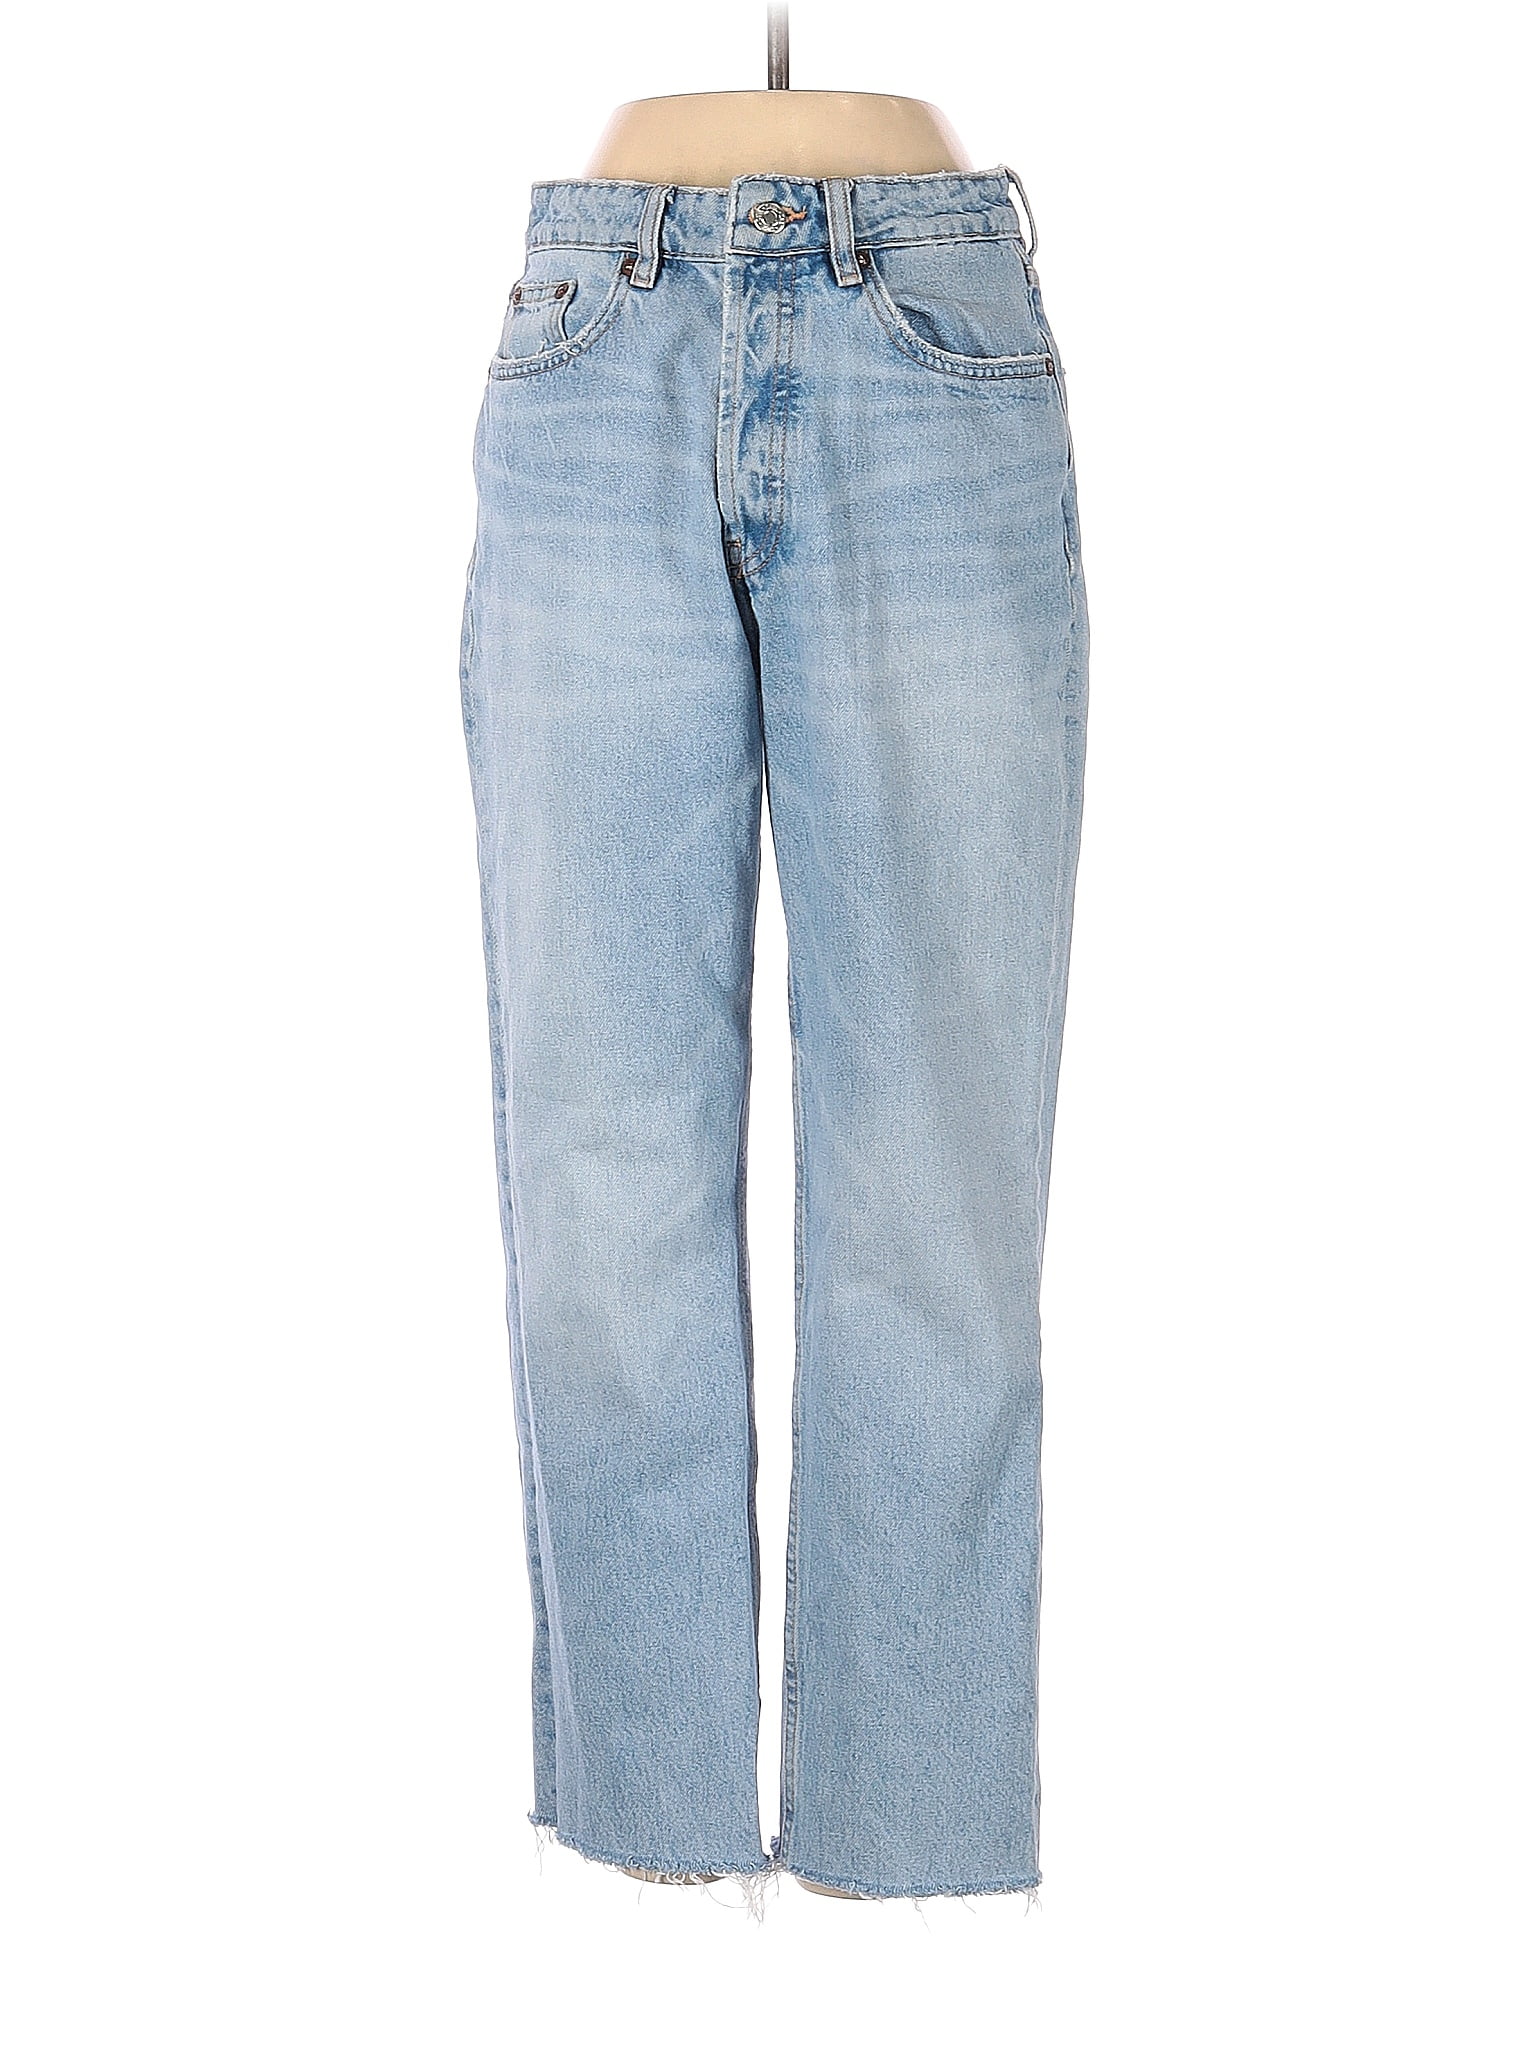 Zara Solid Blue Jeans Size 4 - 42% off | thredUP